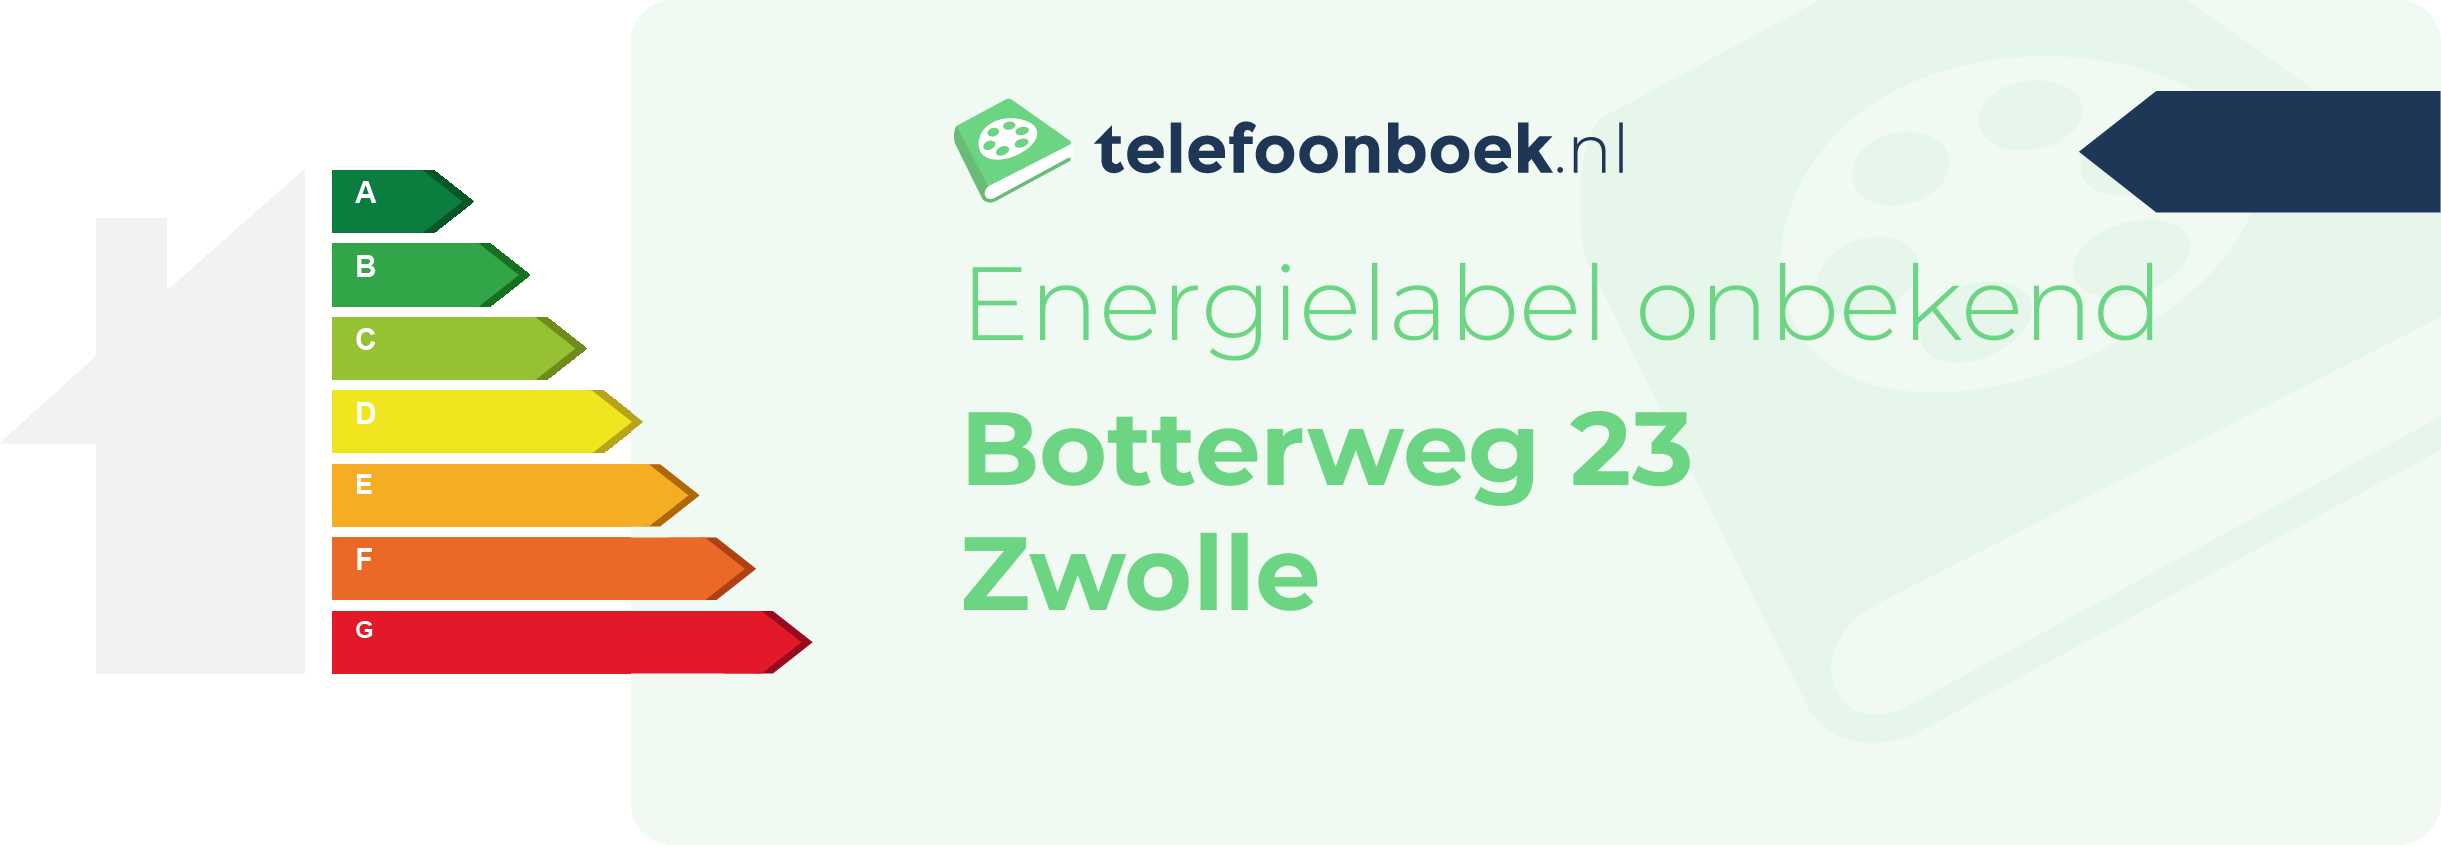 Energielabel Botterweg 23 Zwolle